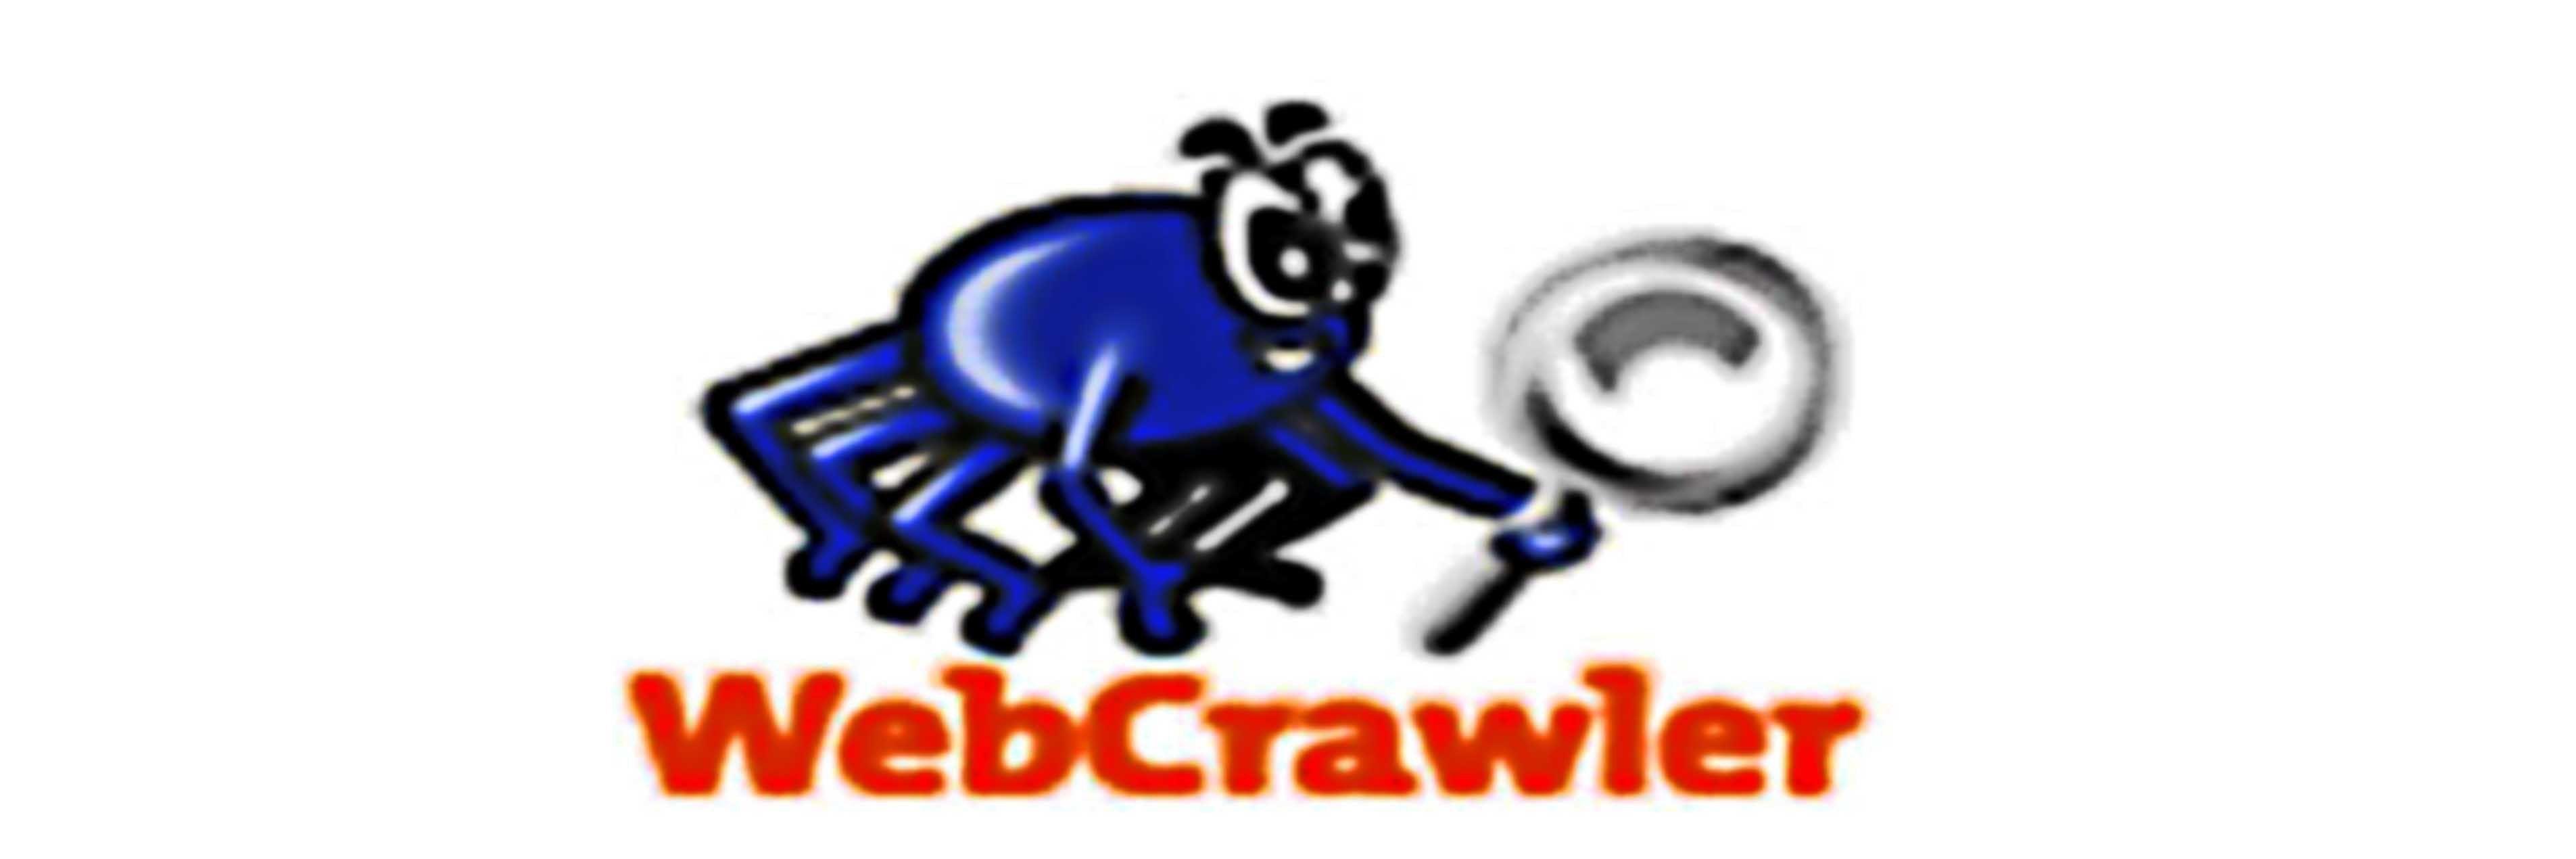 WebCrawler Logo - 15 of the most popular search engines | Athrinel Marketing LLC, USA ...